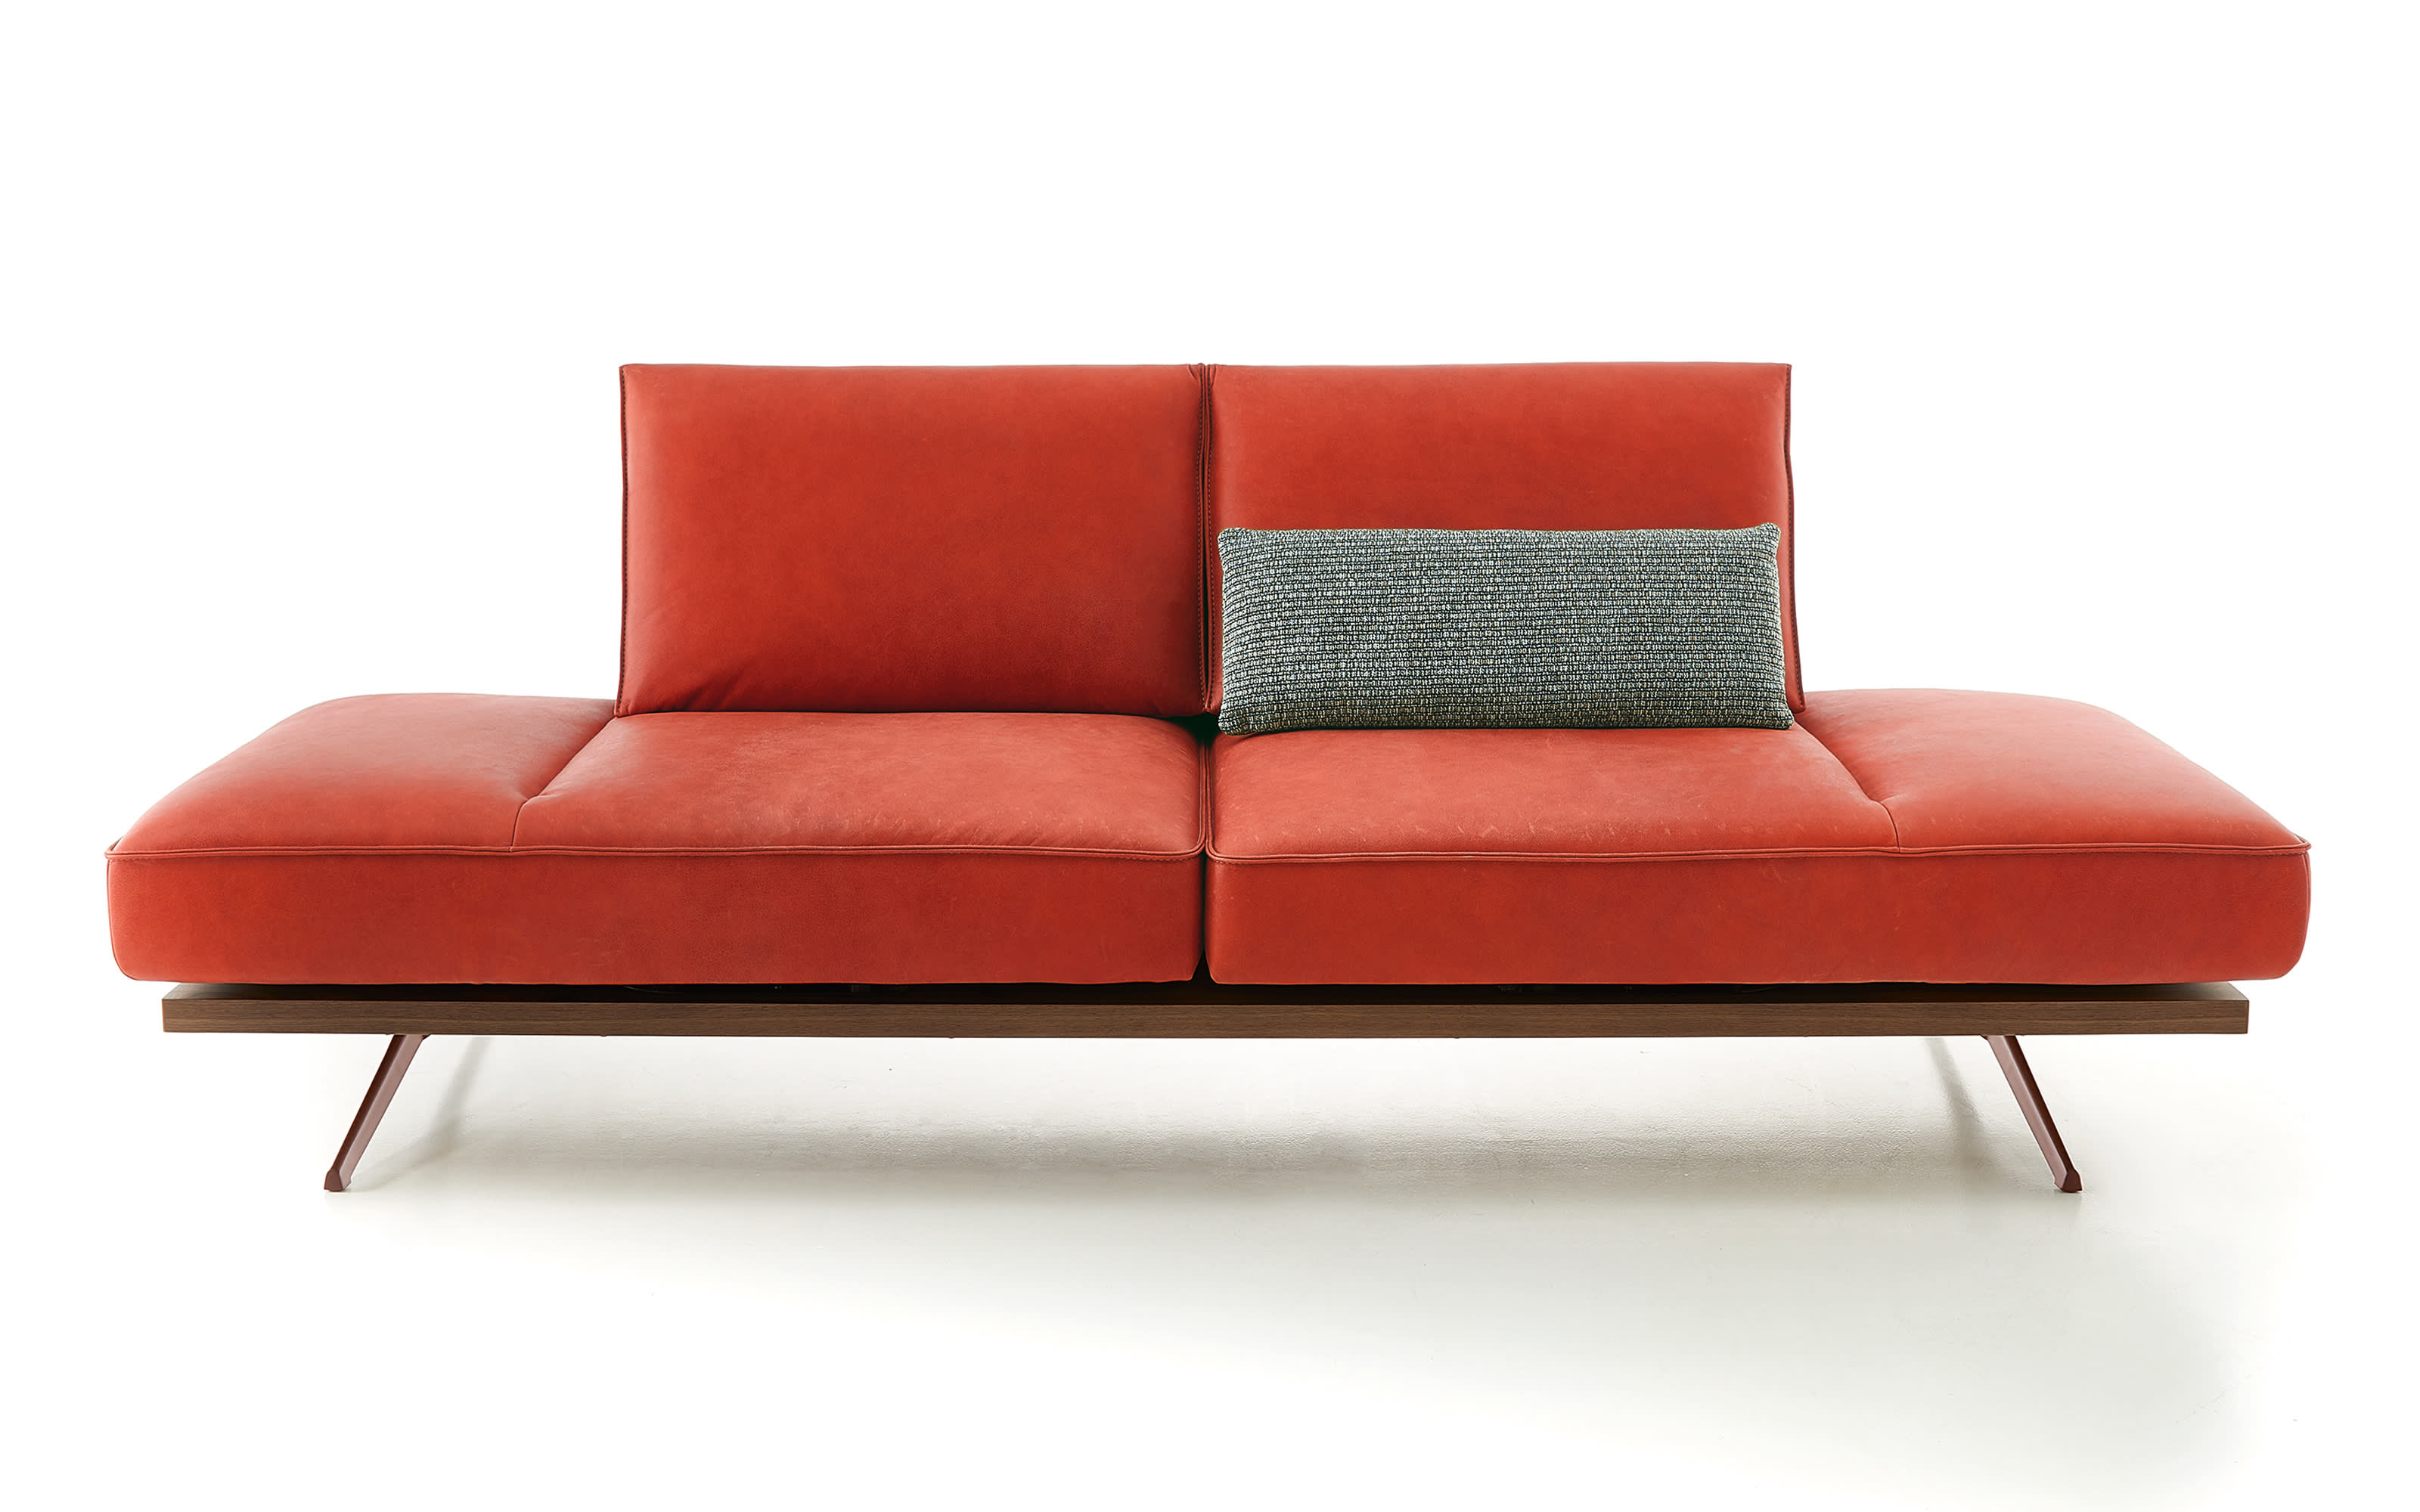 Leder Sofa Phoenix 2,5-sitzig, rot, inkl. Funktionen